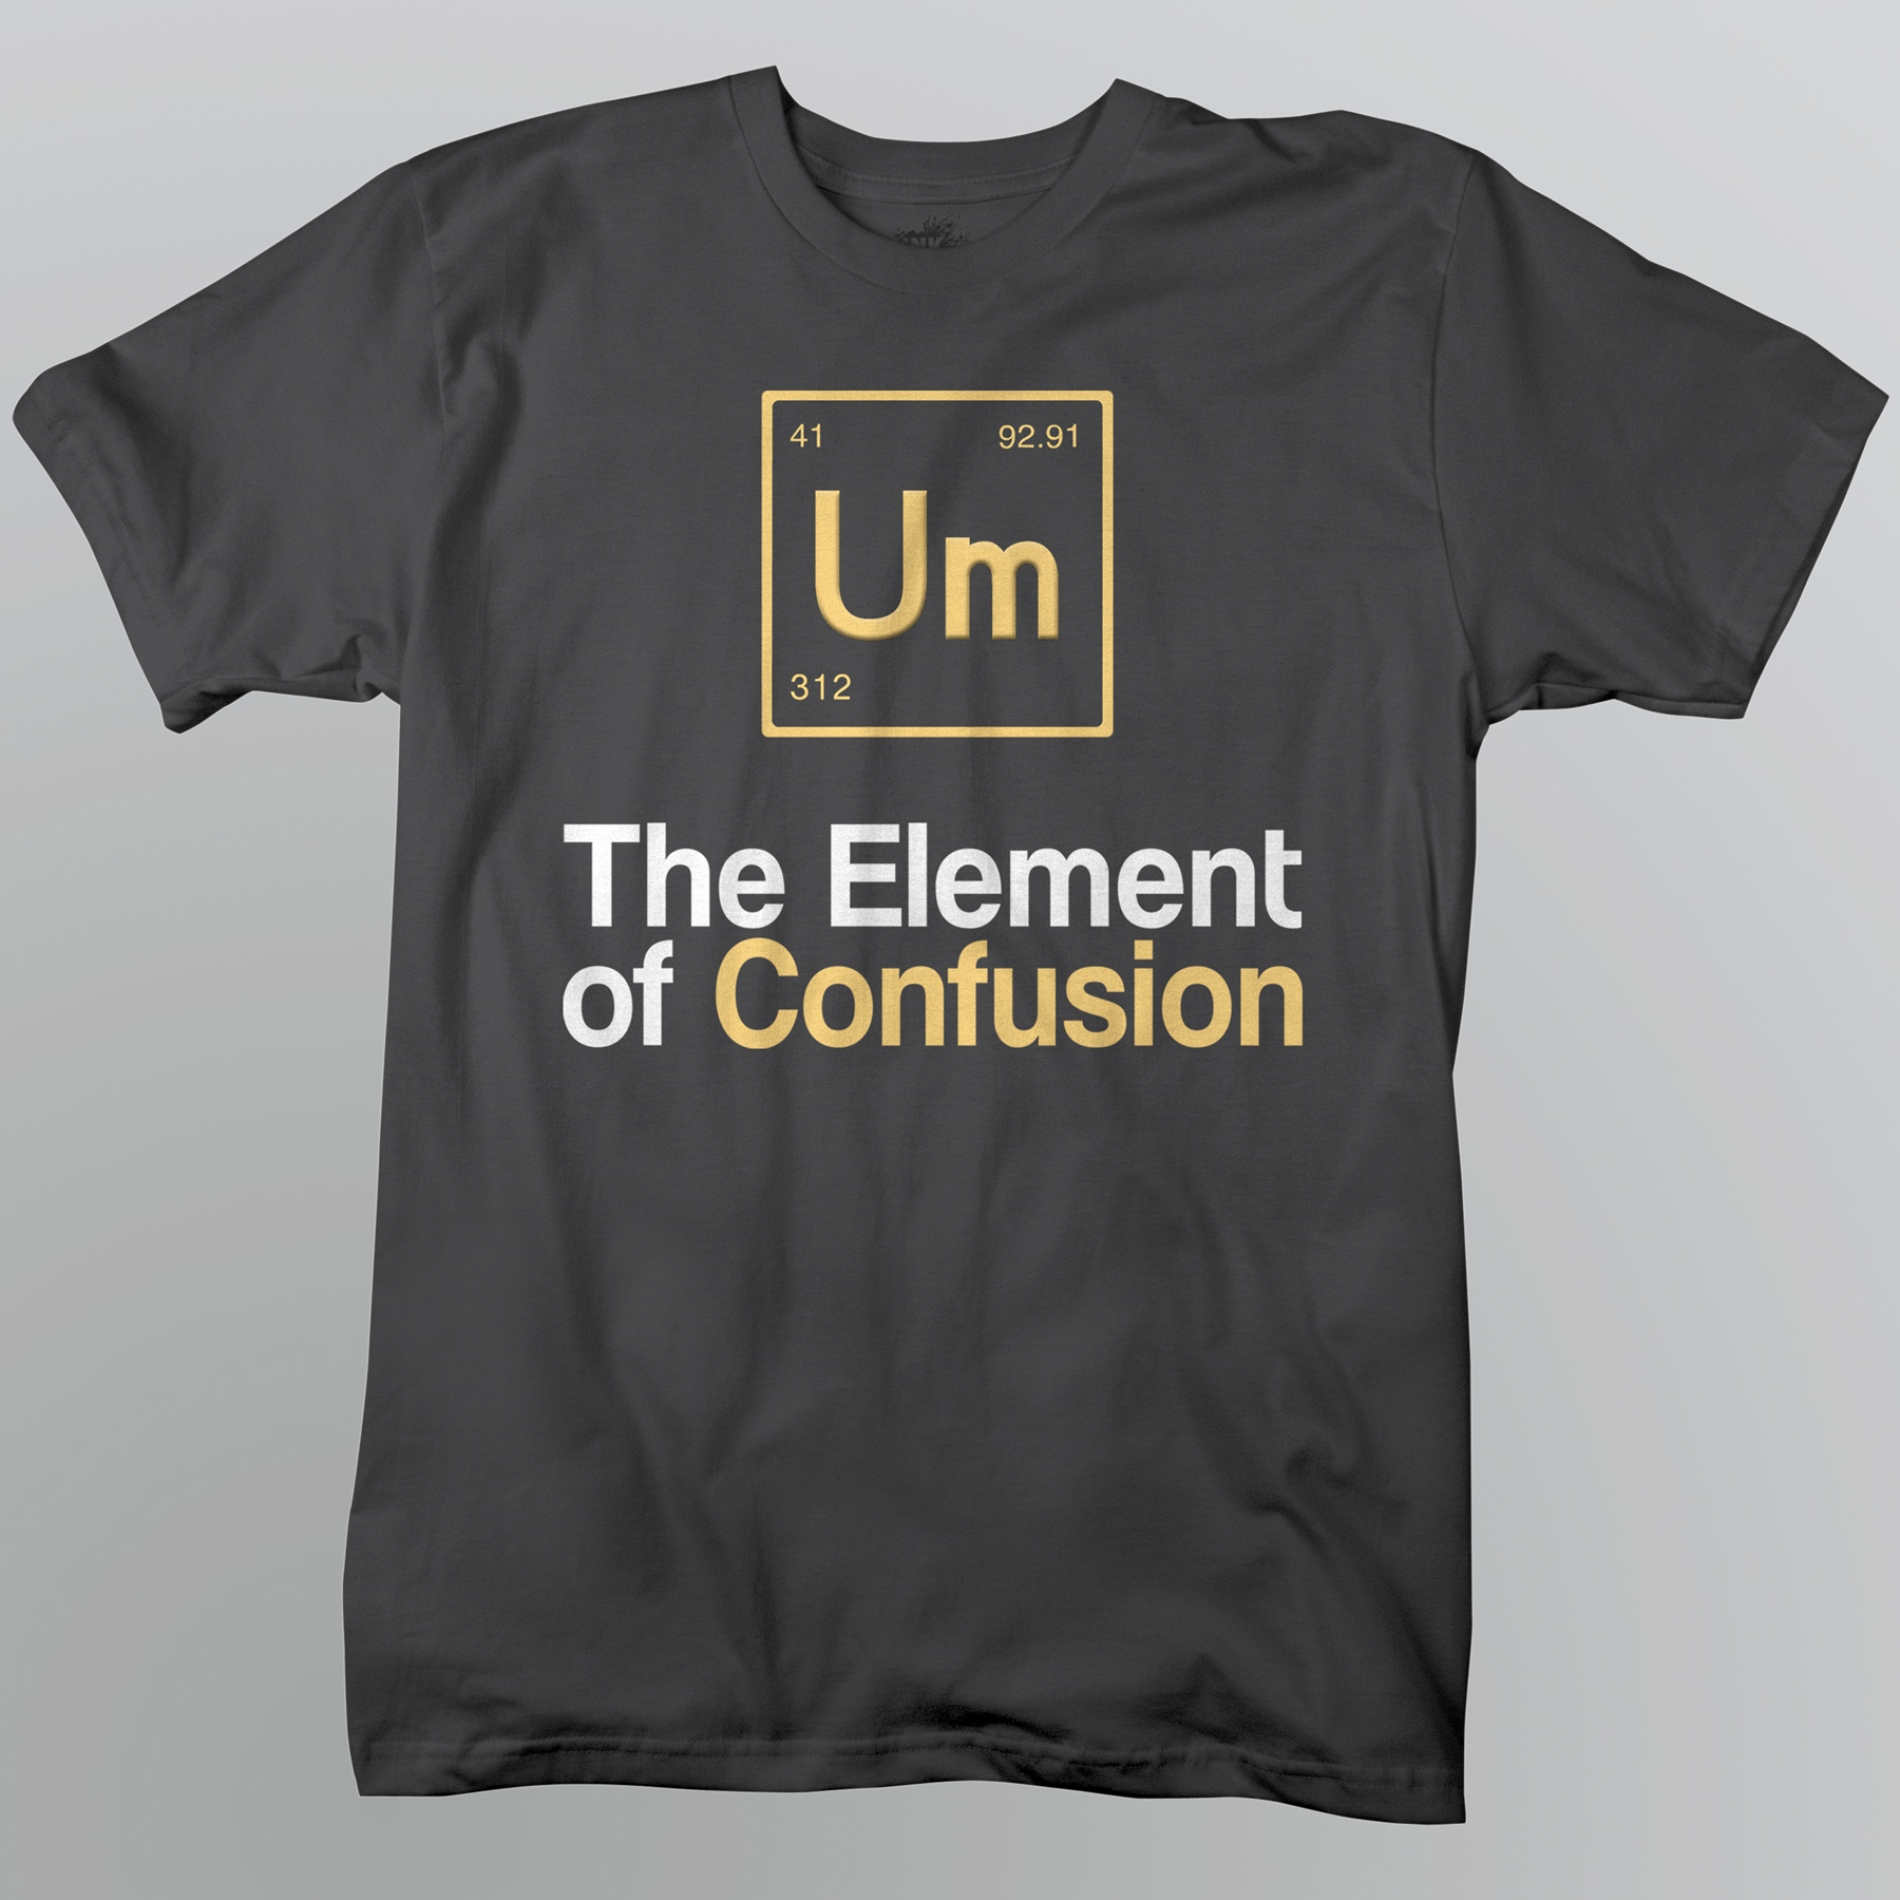 Bravado Men's Graphic T-Shirt - Um Element